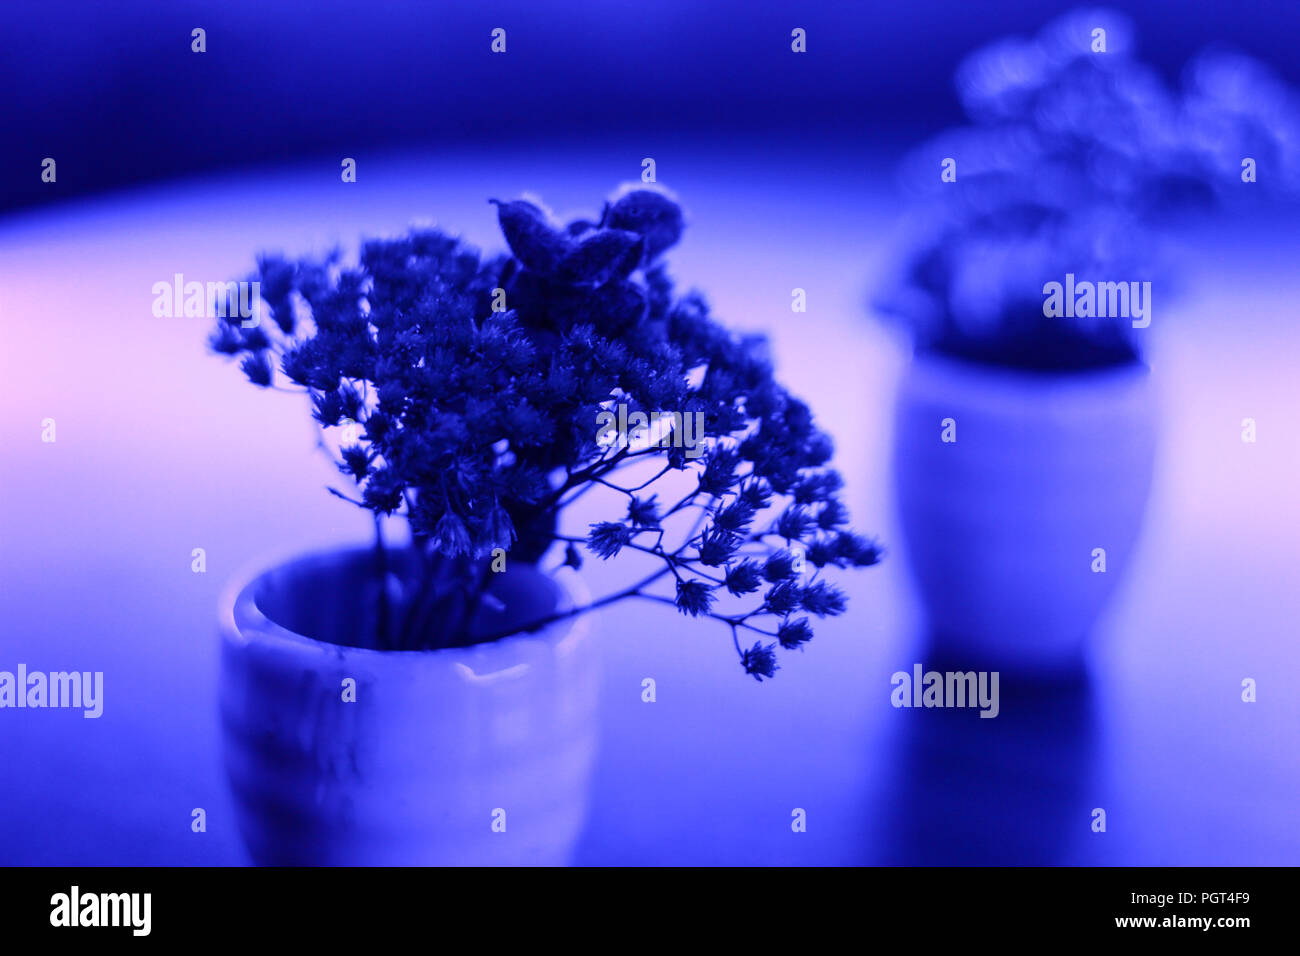 Plants in neon fluorescence blue light Stock Photo